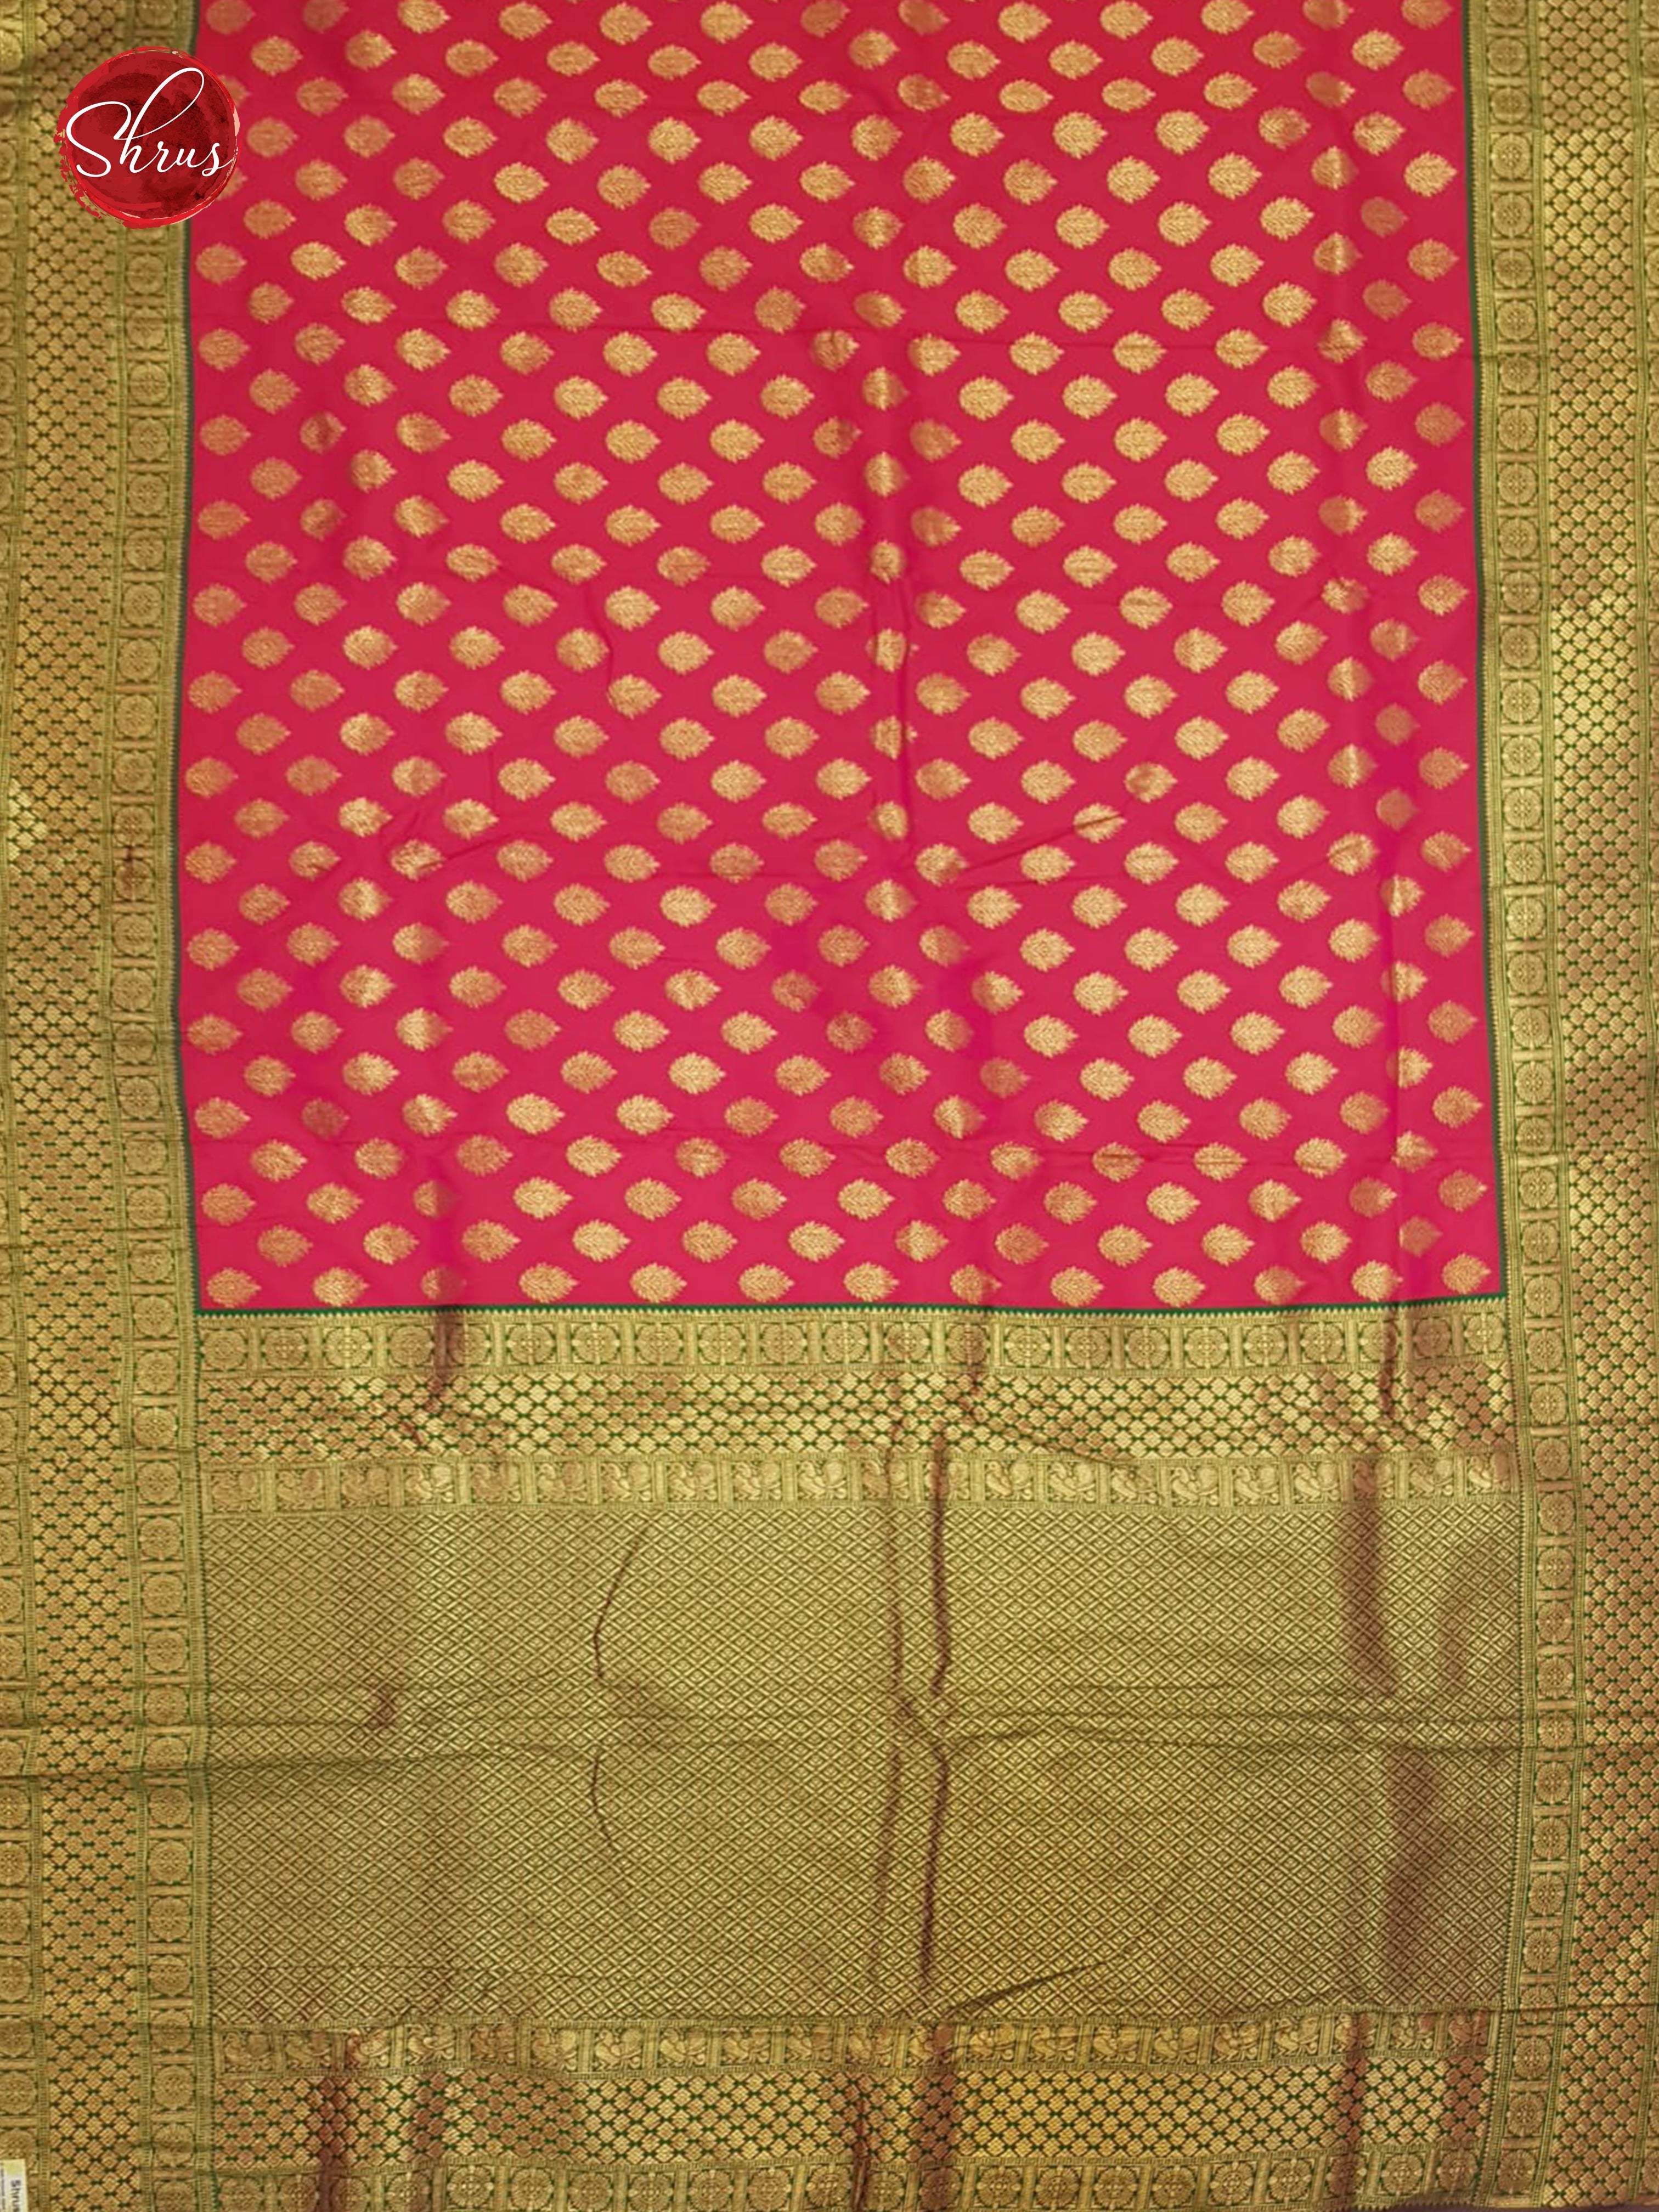 Pink & Green - Semi kanchipuram saree - Shop on ShrusEternity.com